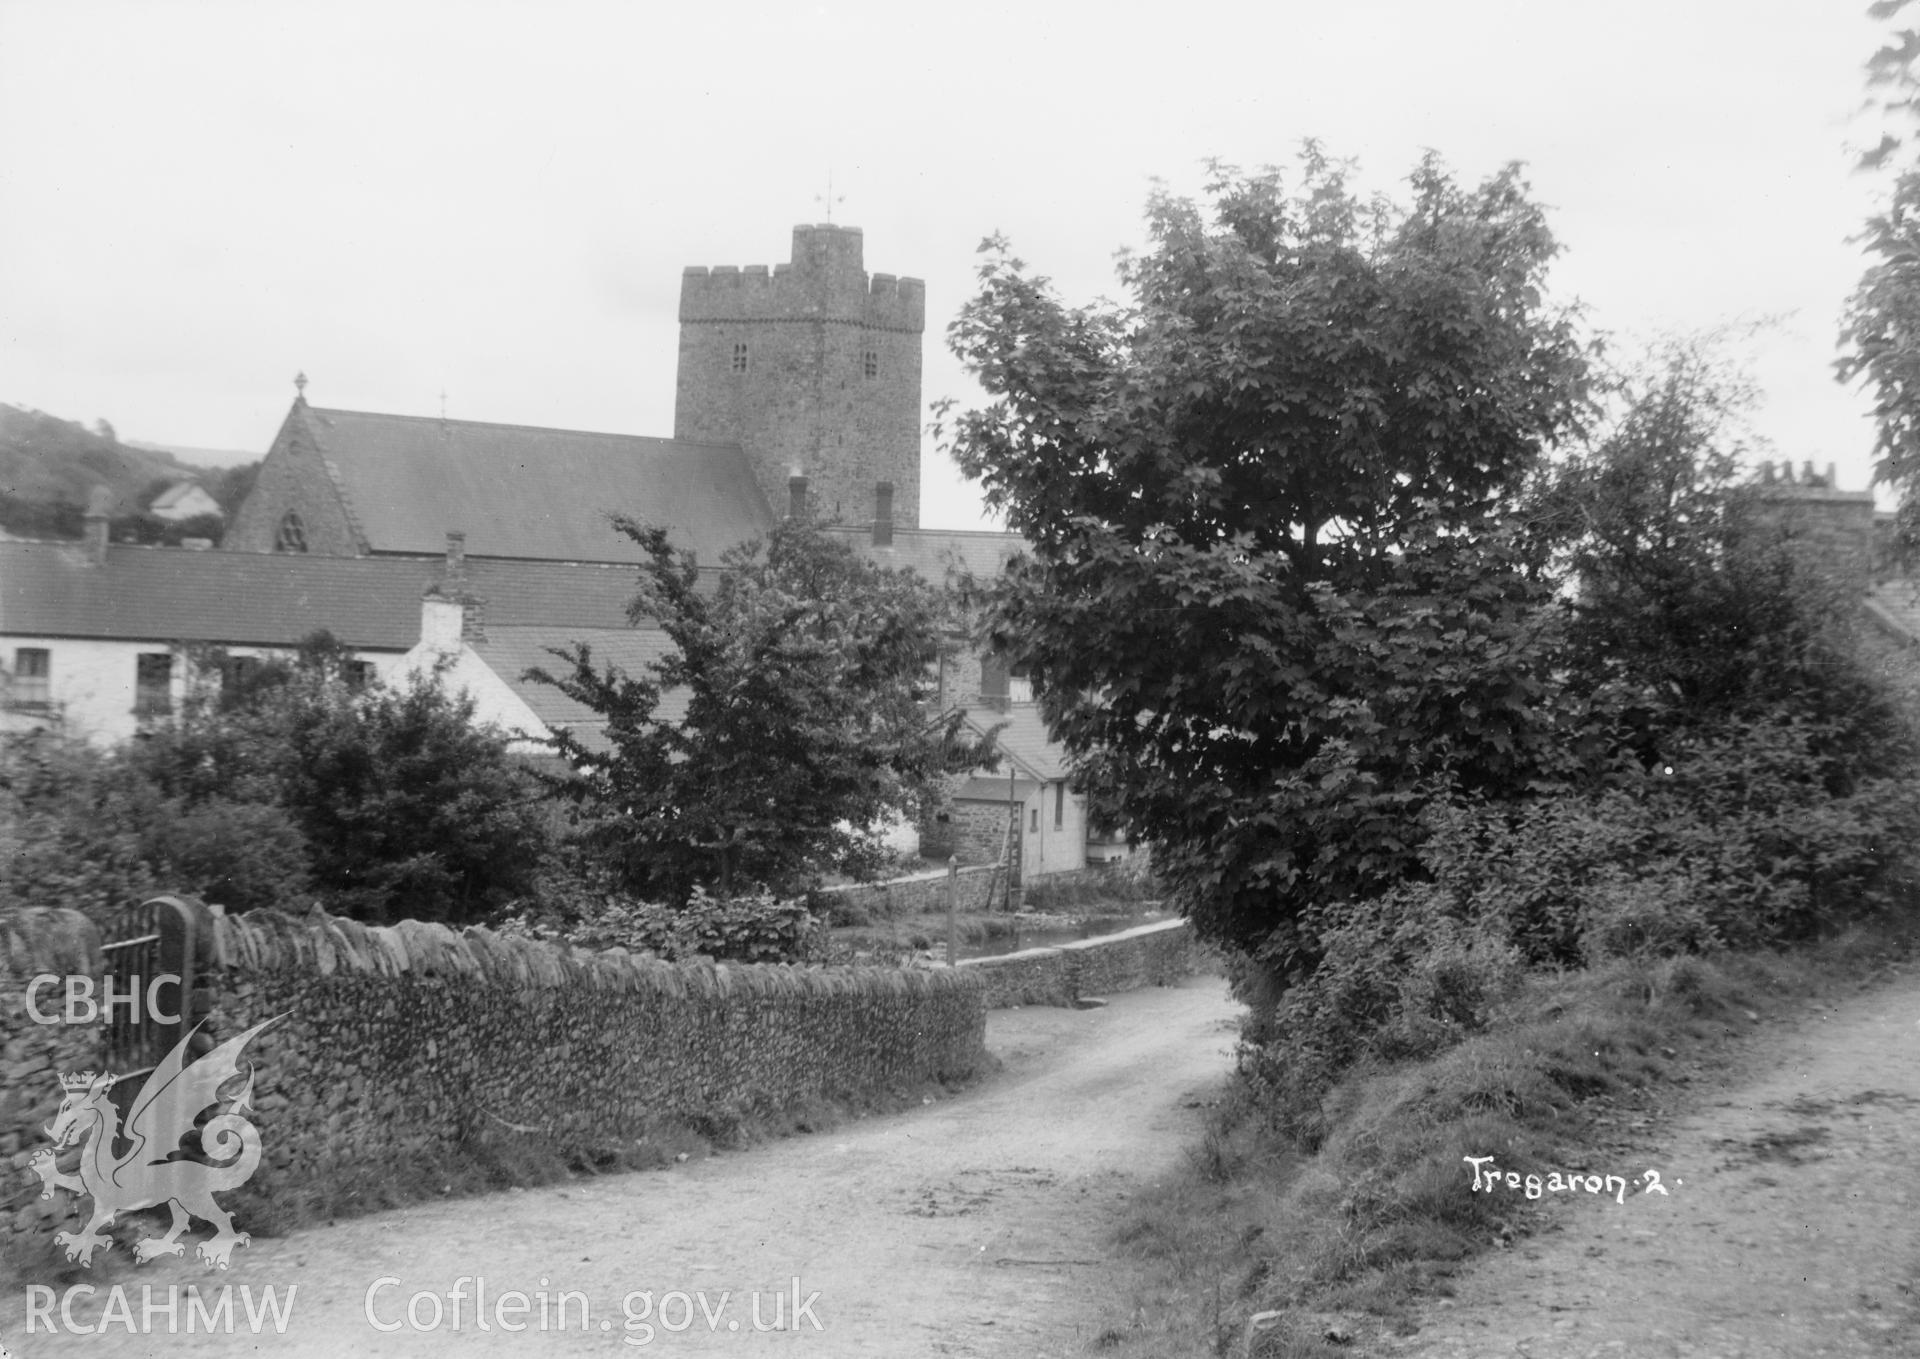 View of Tregaron Church taken by W A Call circa 1920.